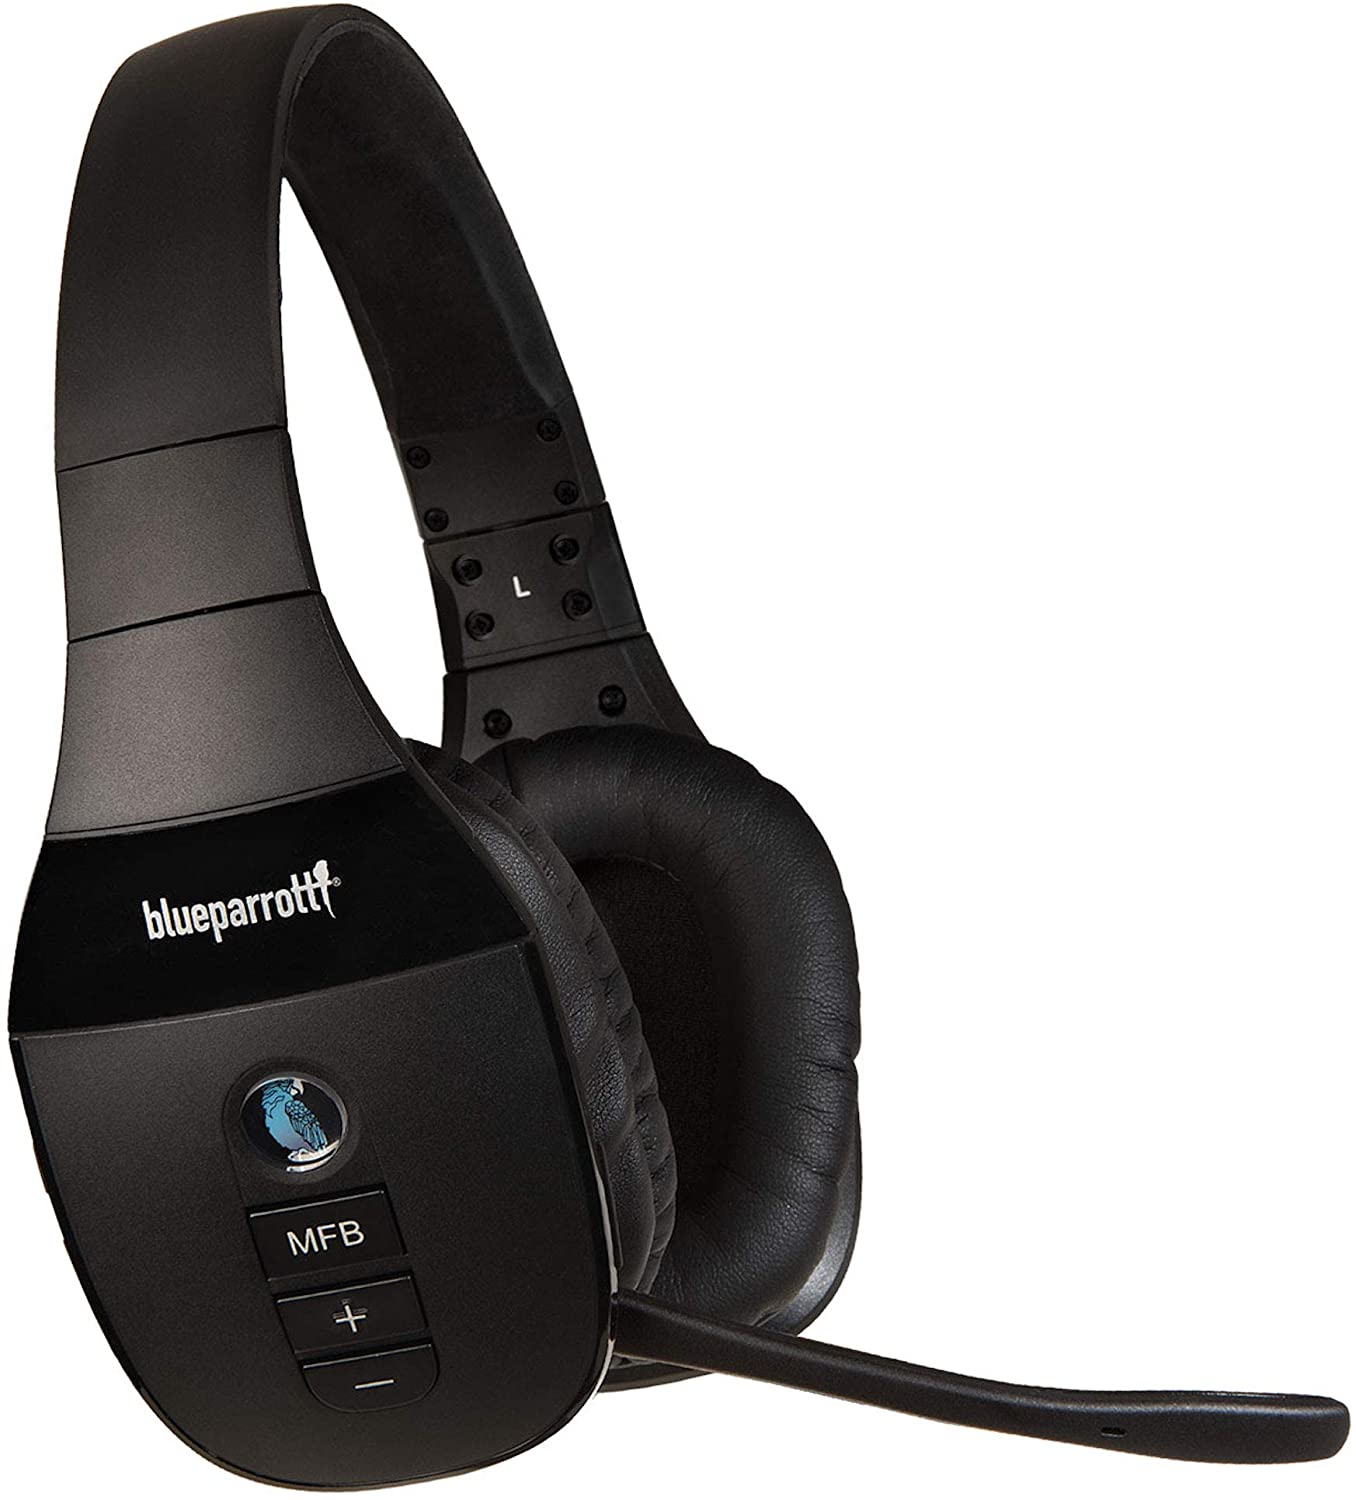 BlueParrott S450-XT Voice-Controlled Bluetooth Headset.